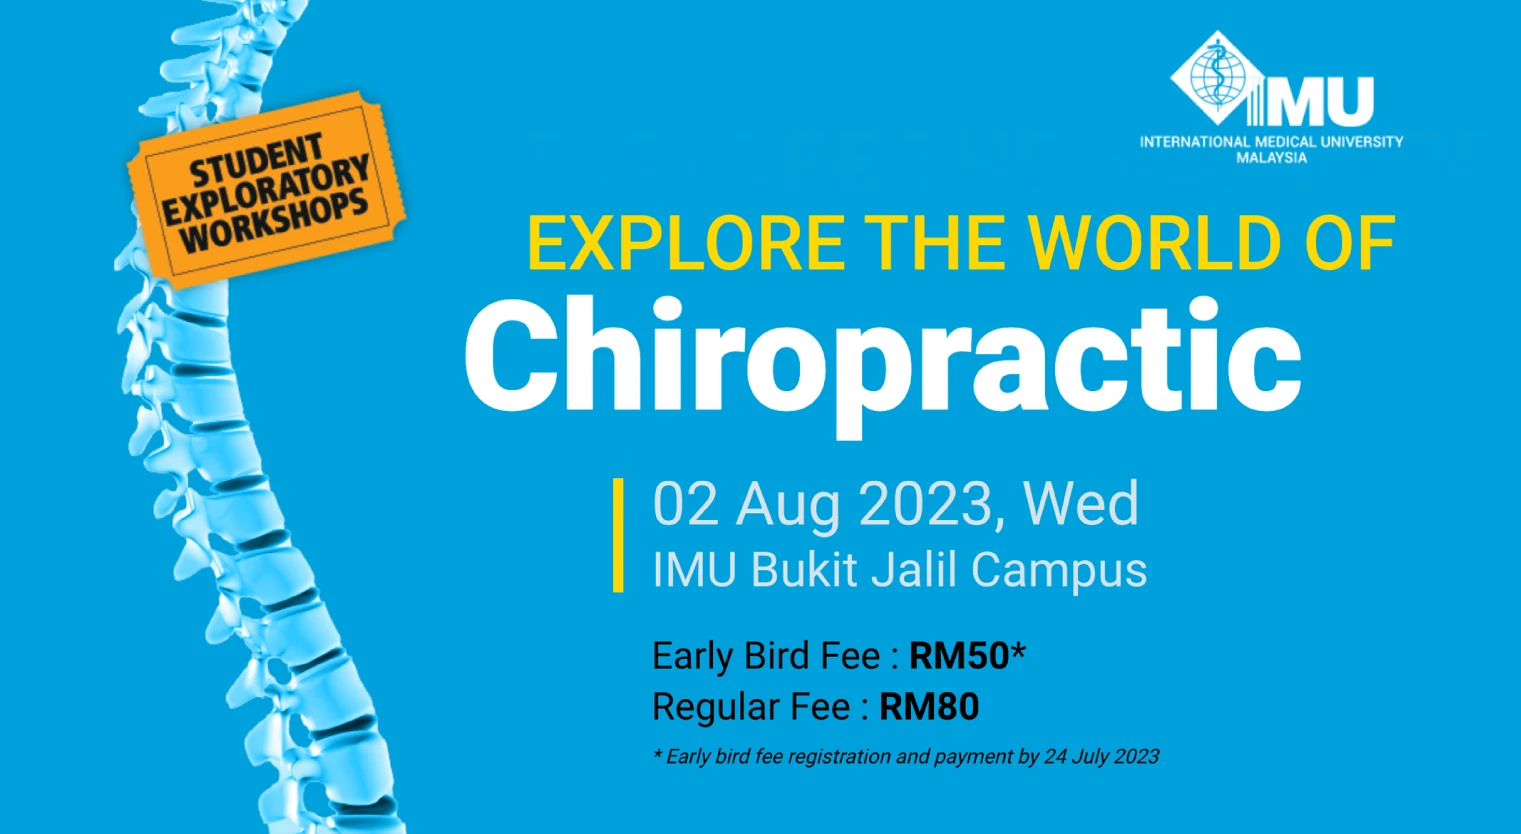 imu-sew-chiropractic-workshop-august-2023